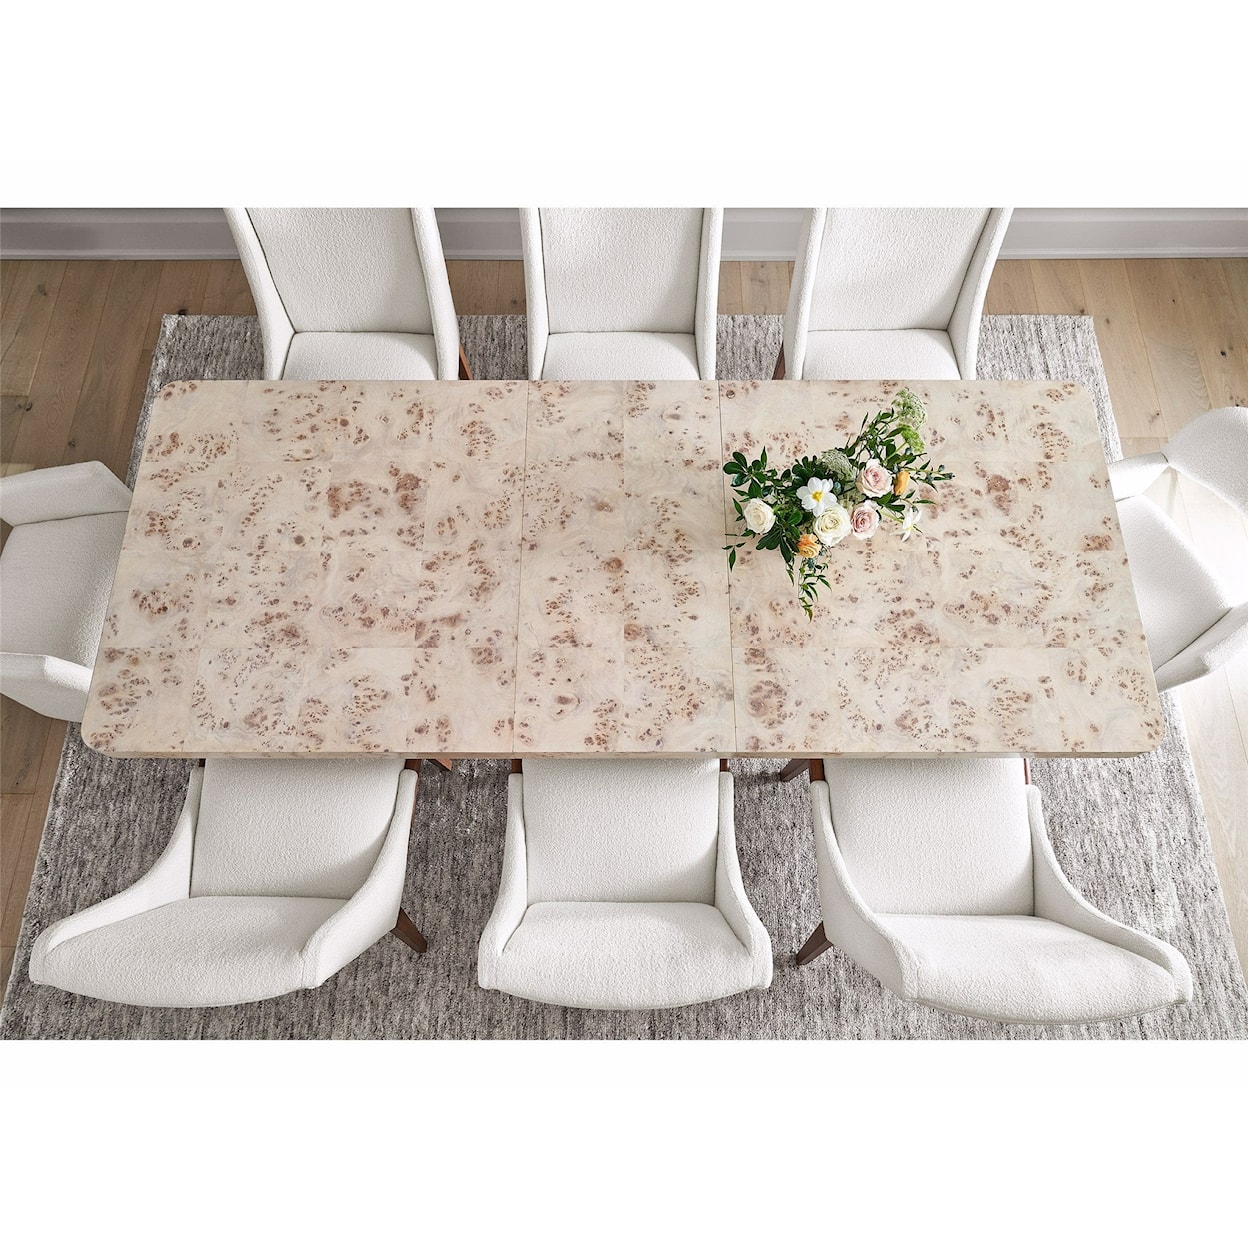 Universal Tranquility - Miranda Kerr Home Dining Table